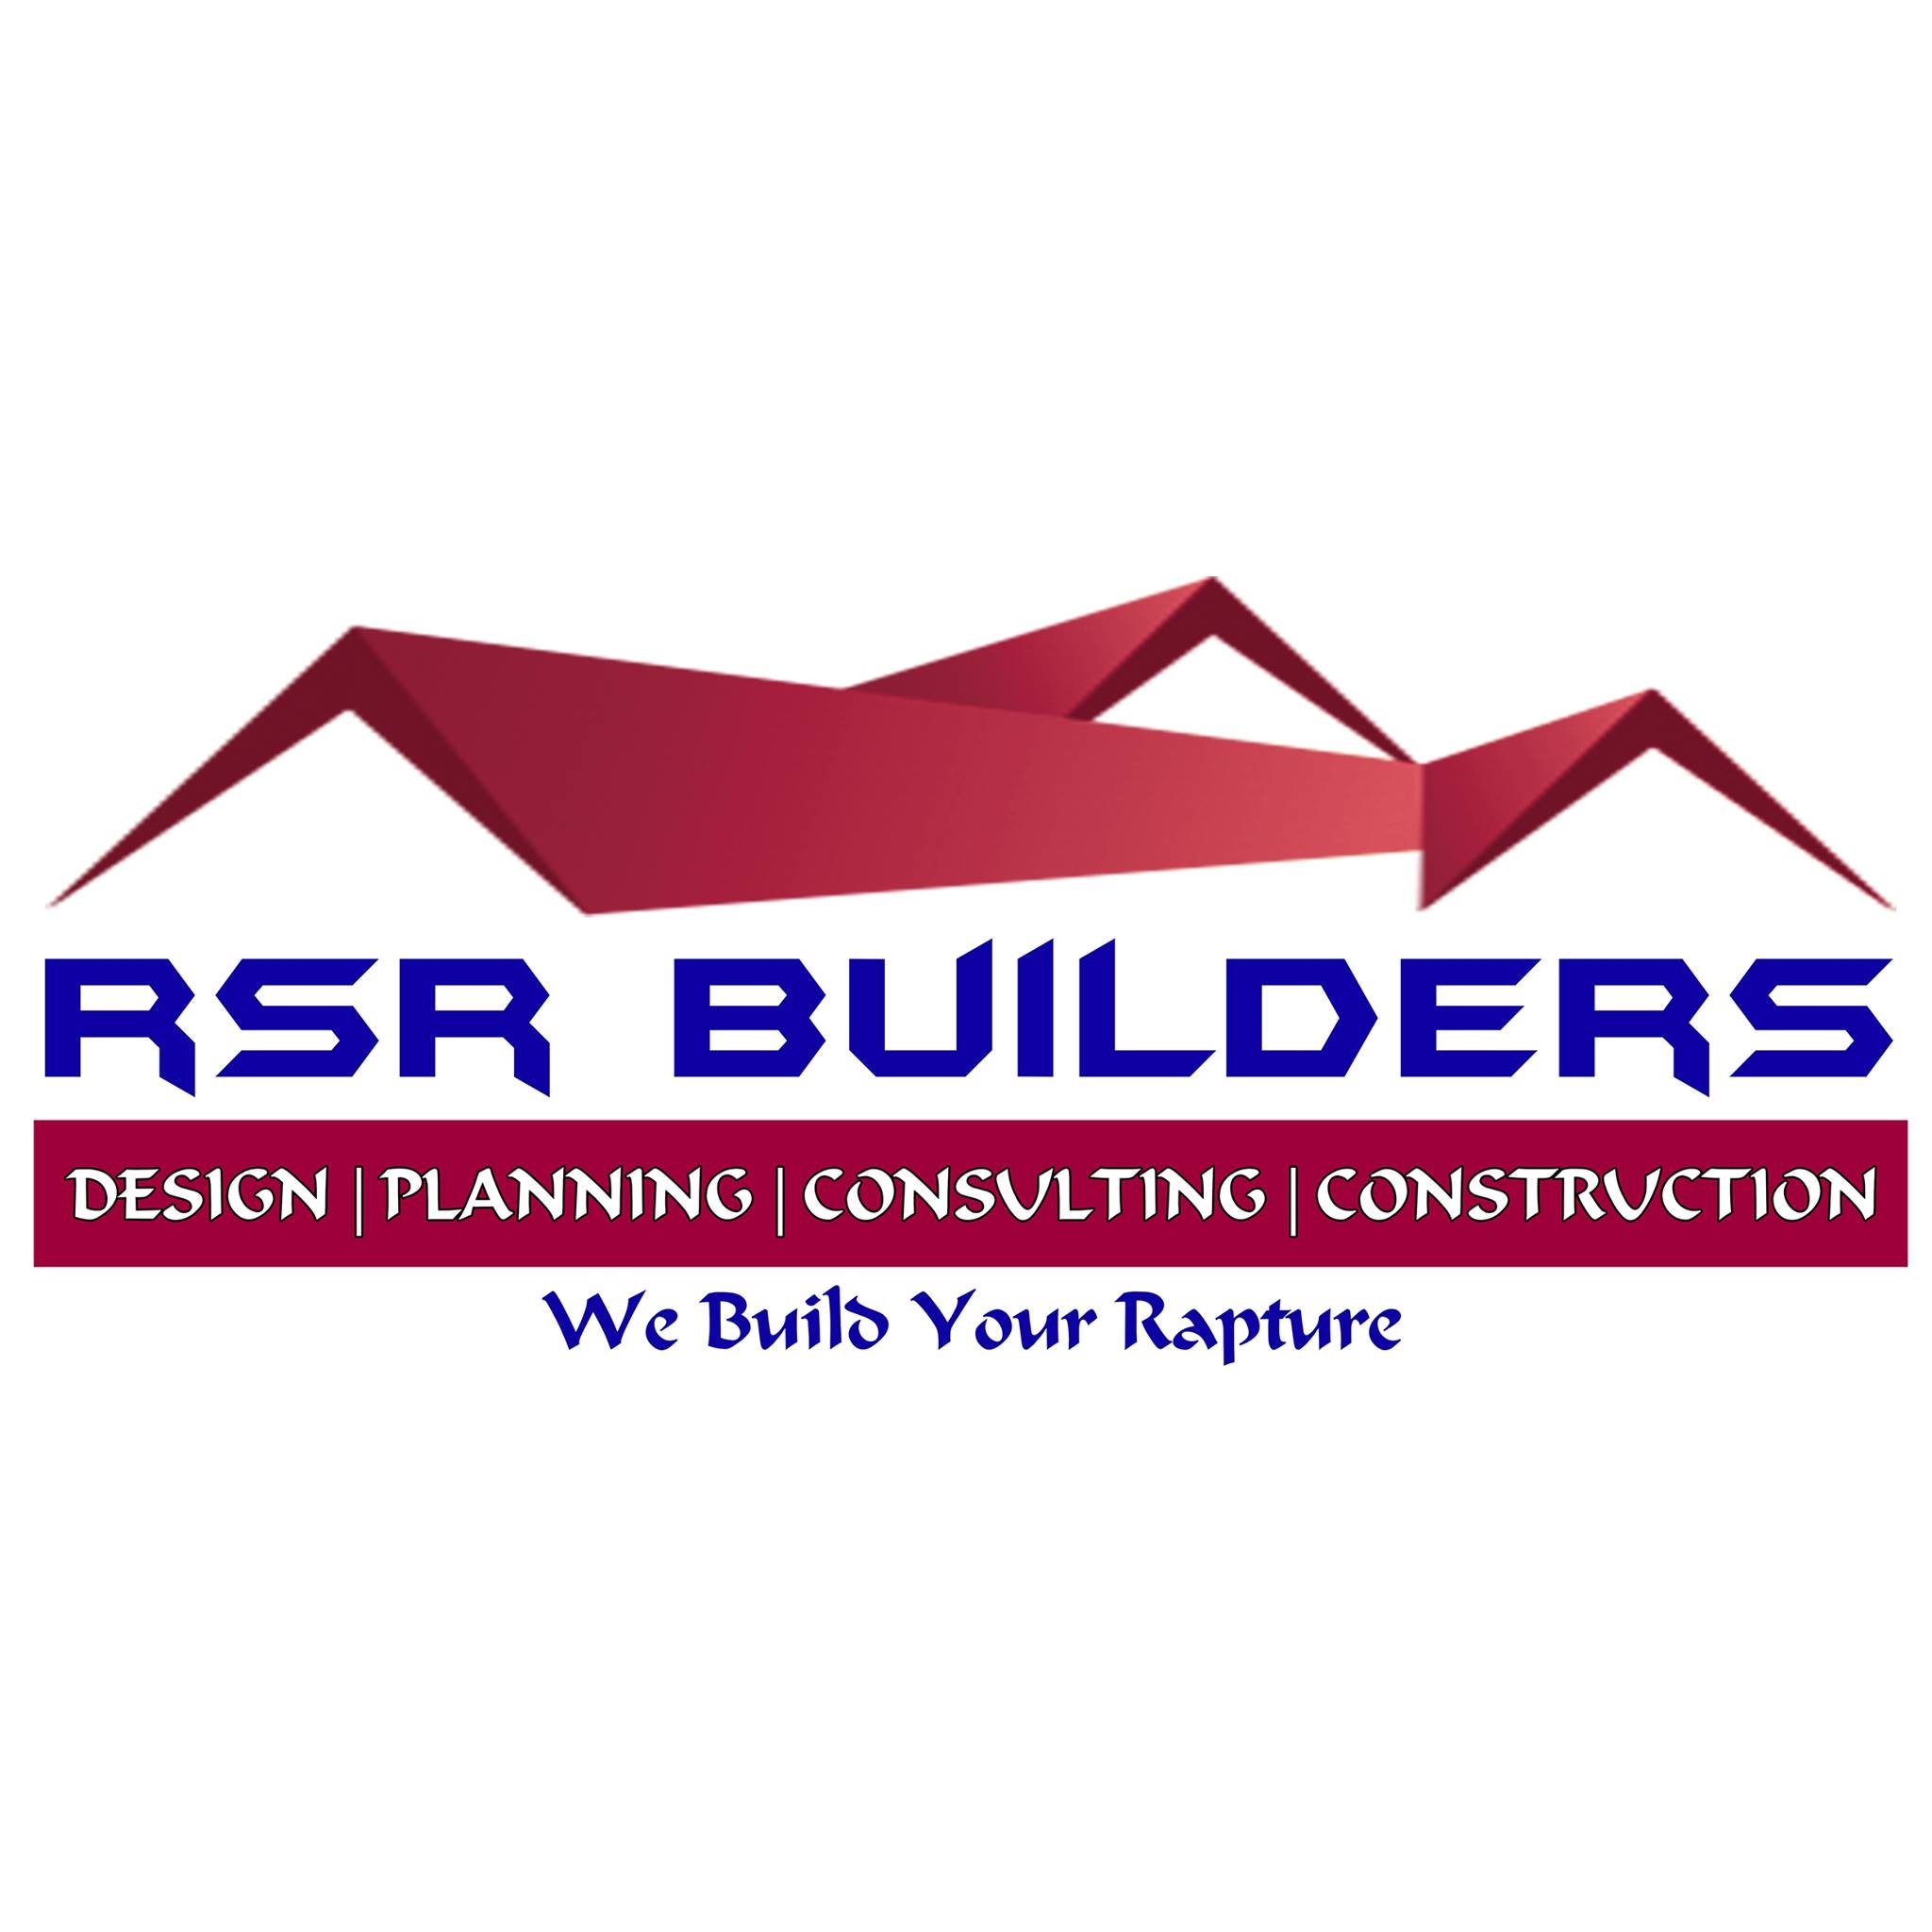 RSR BUILDERS|Legal Services|Professional Services